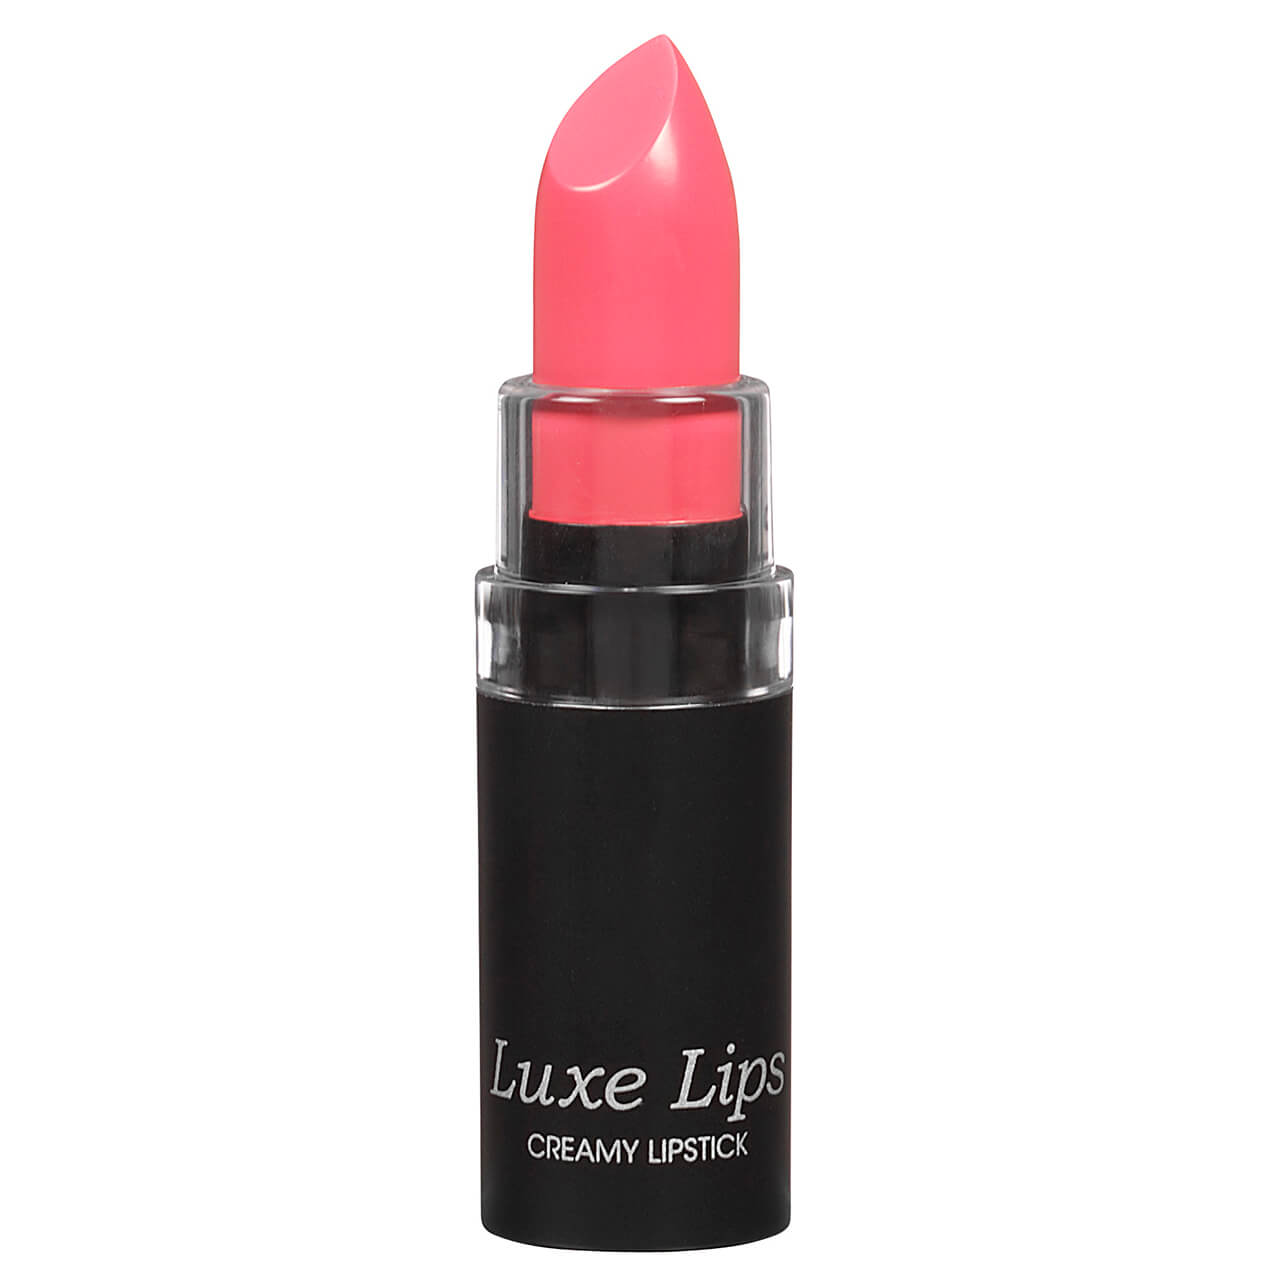 Styli-Style Cosmetics Luxe Lips Creamy Lipstick - Stylette - ADDROS.COM